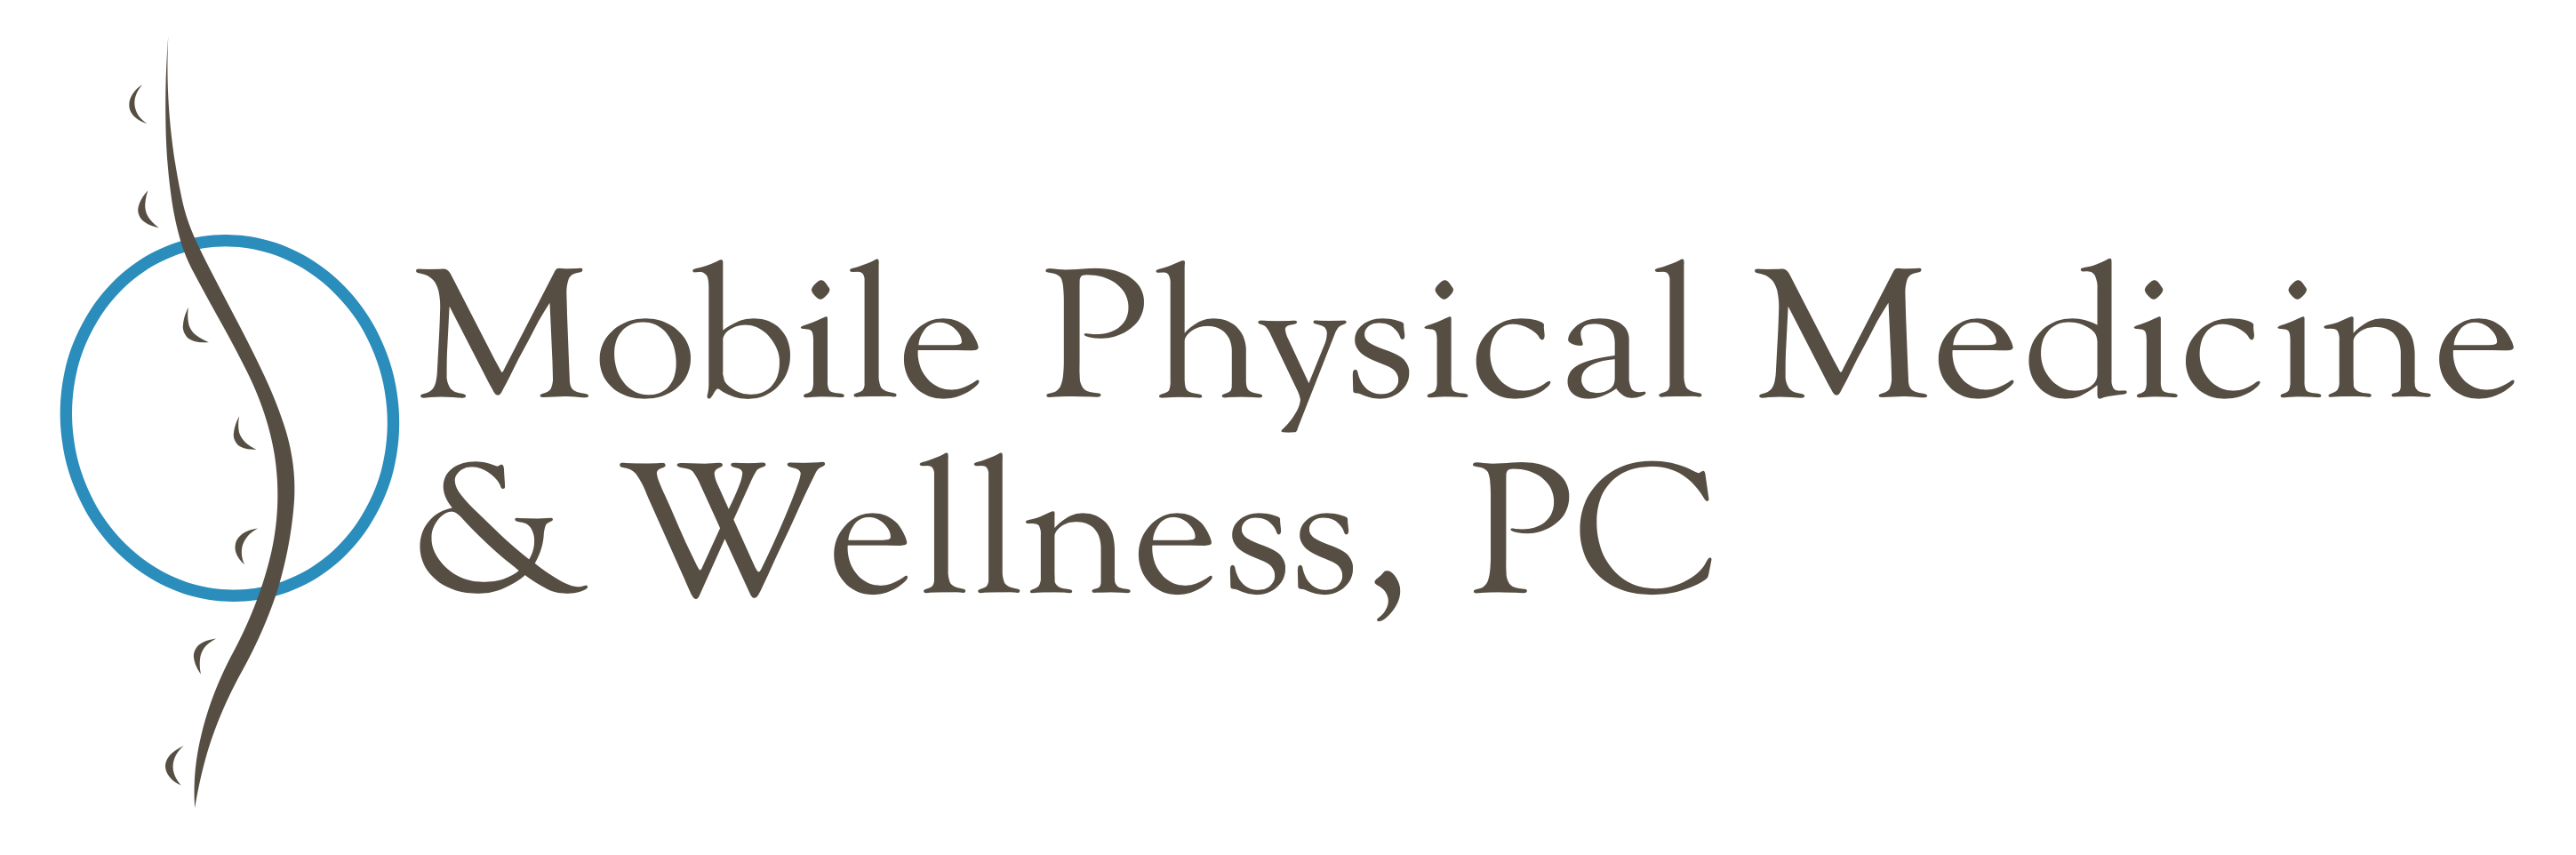 Mobile Physical Medicine & Wellness